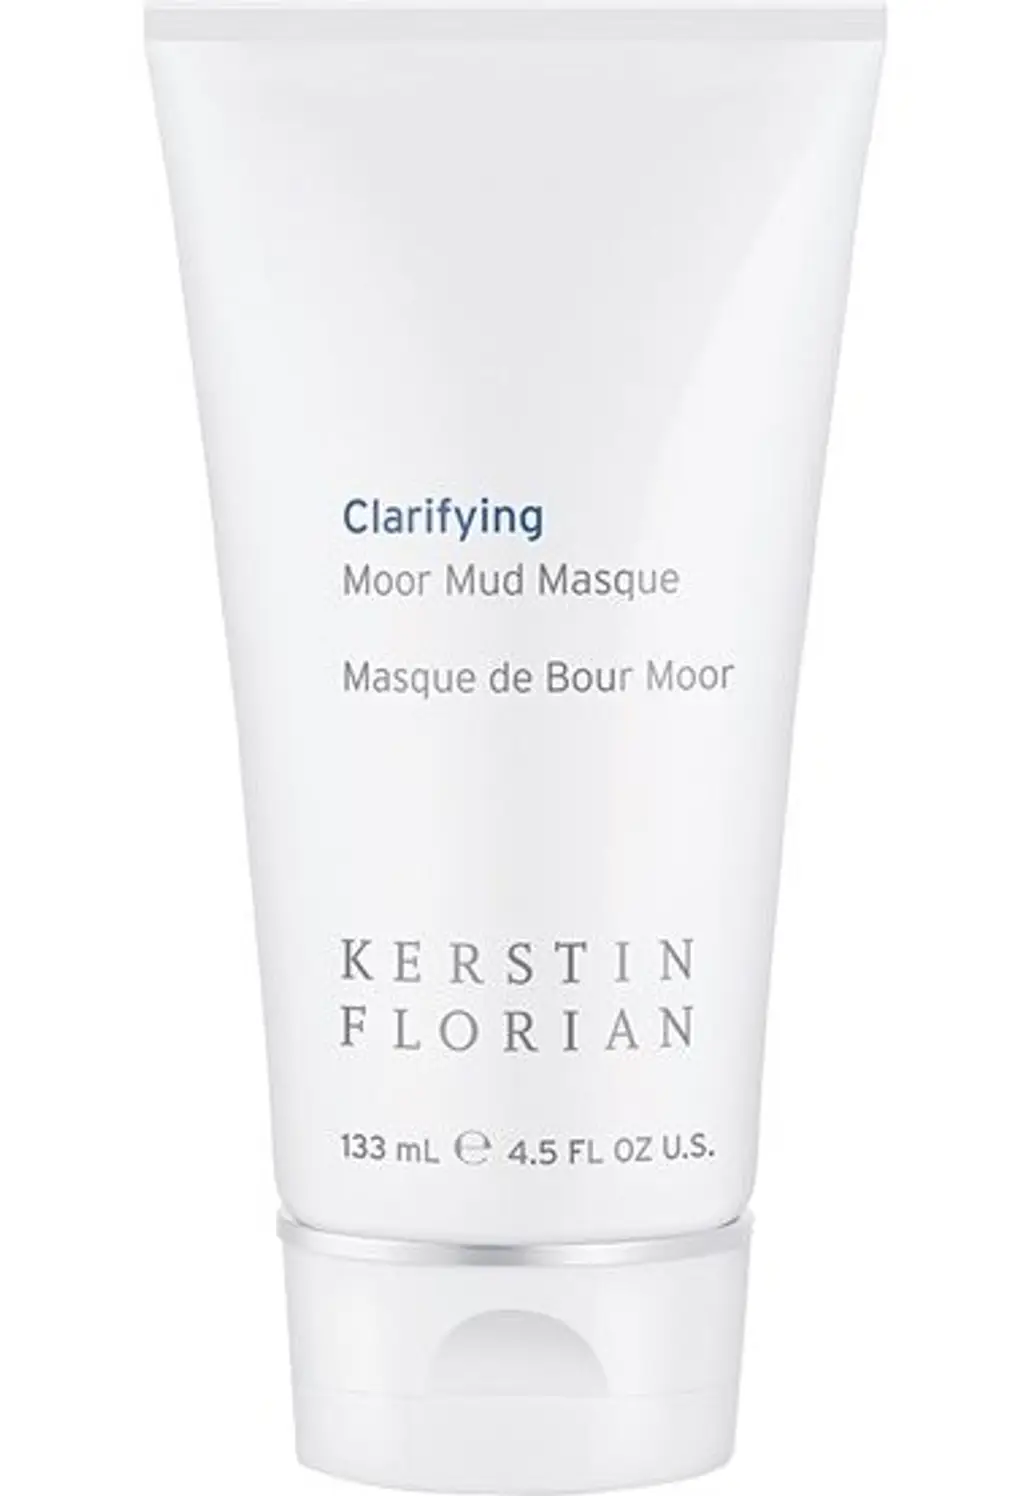 Kerstin Florian Clarifying Moor Mud Masque